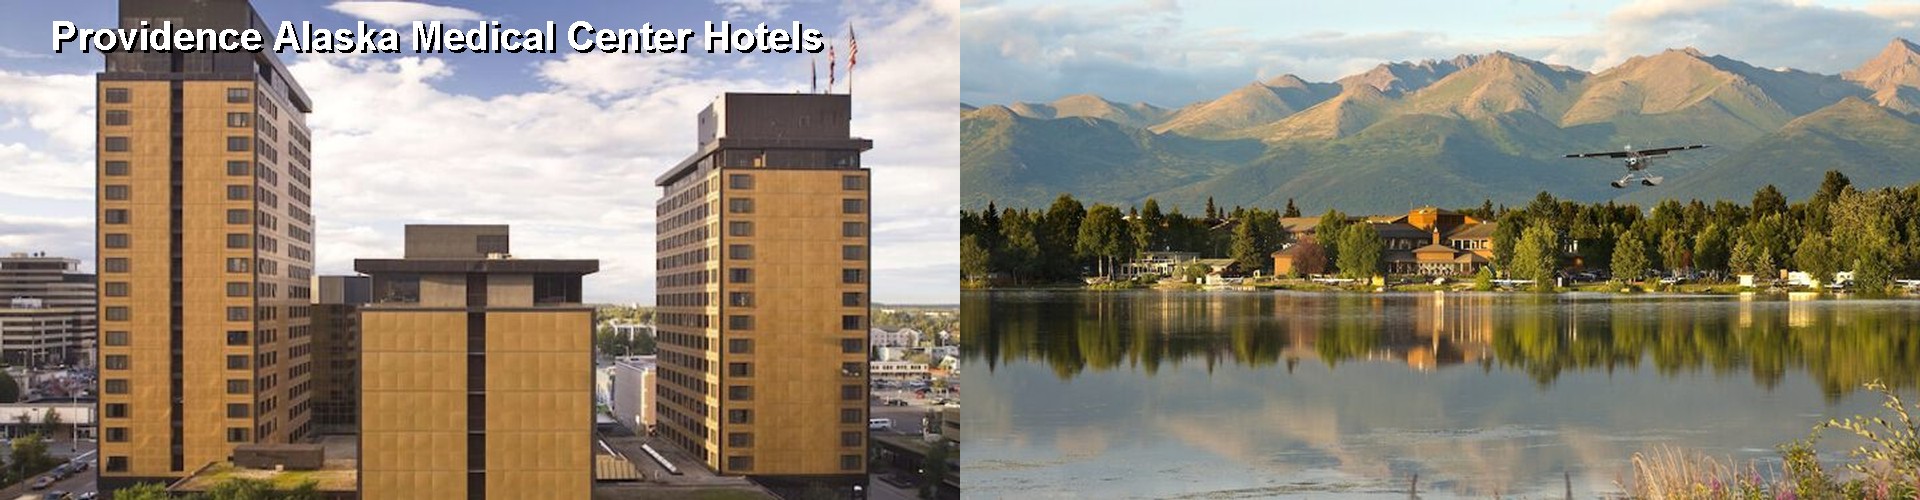 5 Best Hotels near Providence Alaska Medical Center